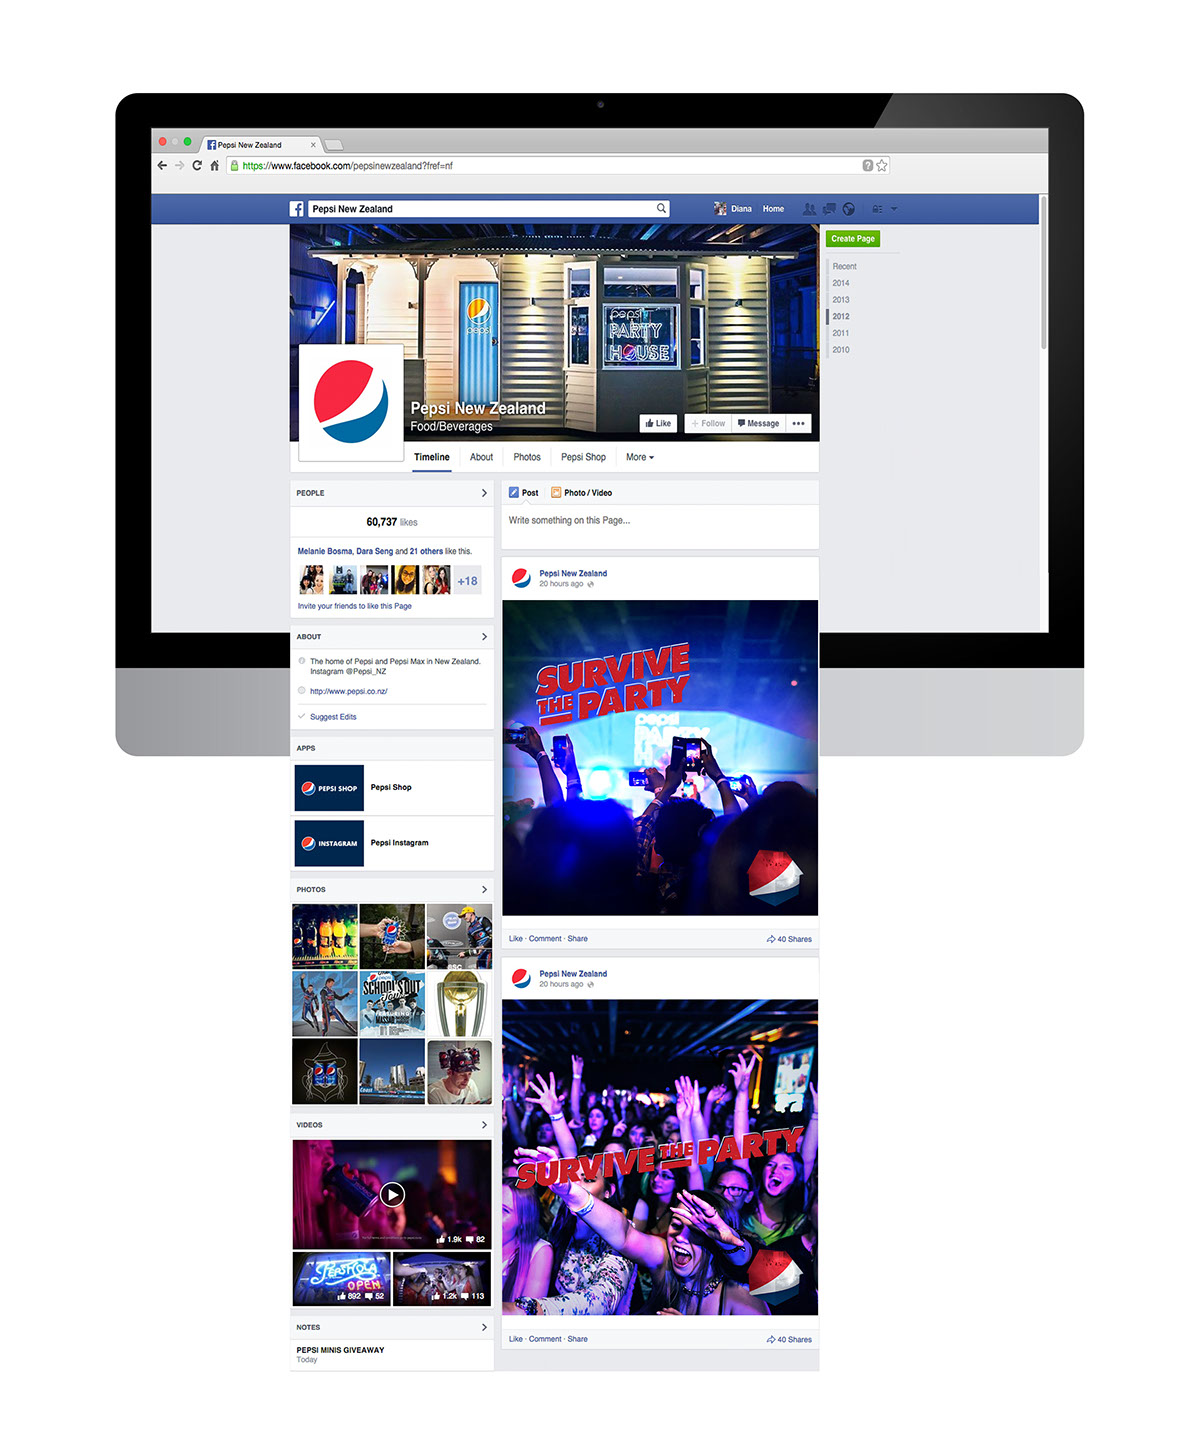 pepsi Pepsi Party House Survive The Party social media Promotion online content web assets facebook